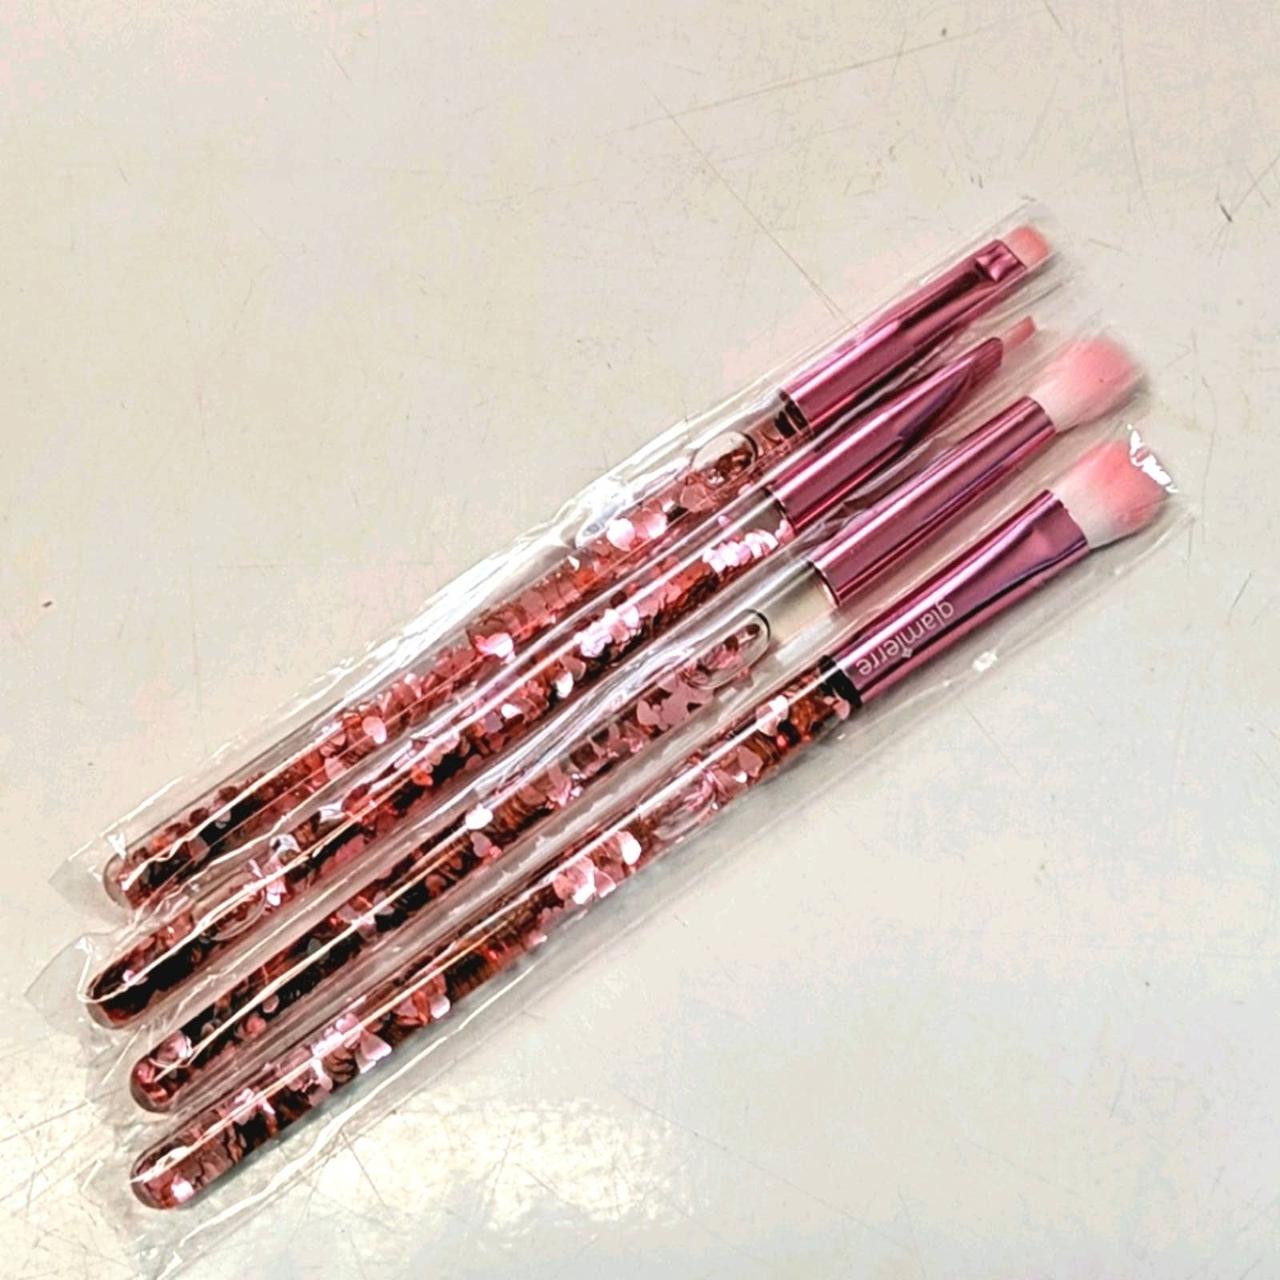 GLAMIERRE Pink Luxe Glitter Eye Brush Collection.... - Depop